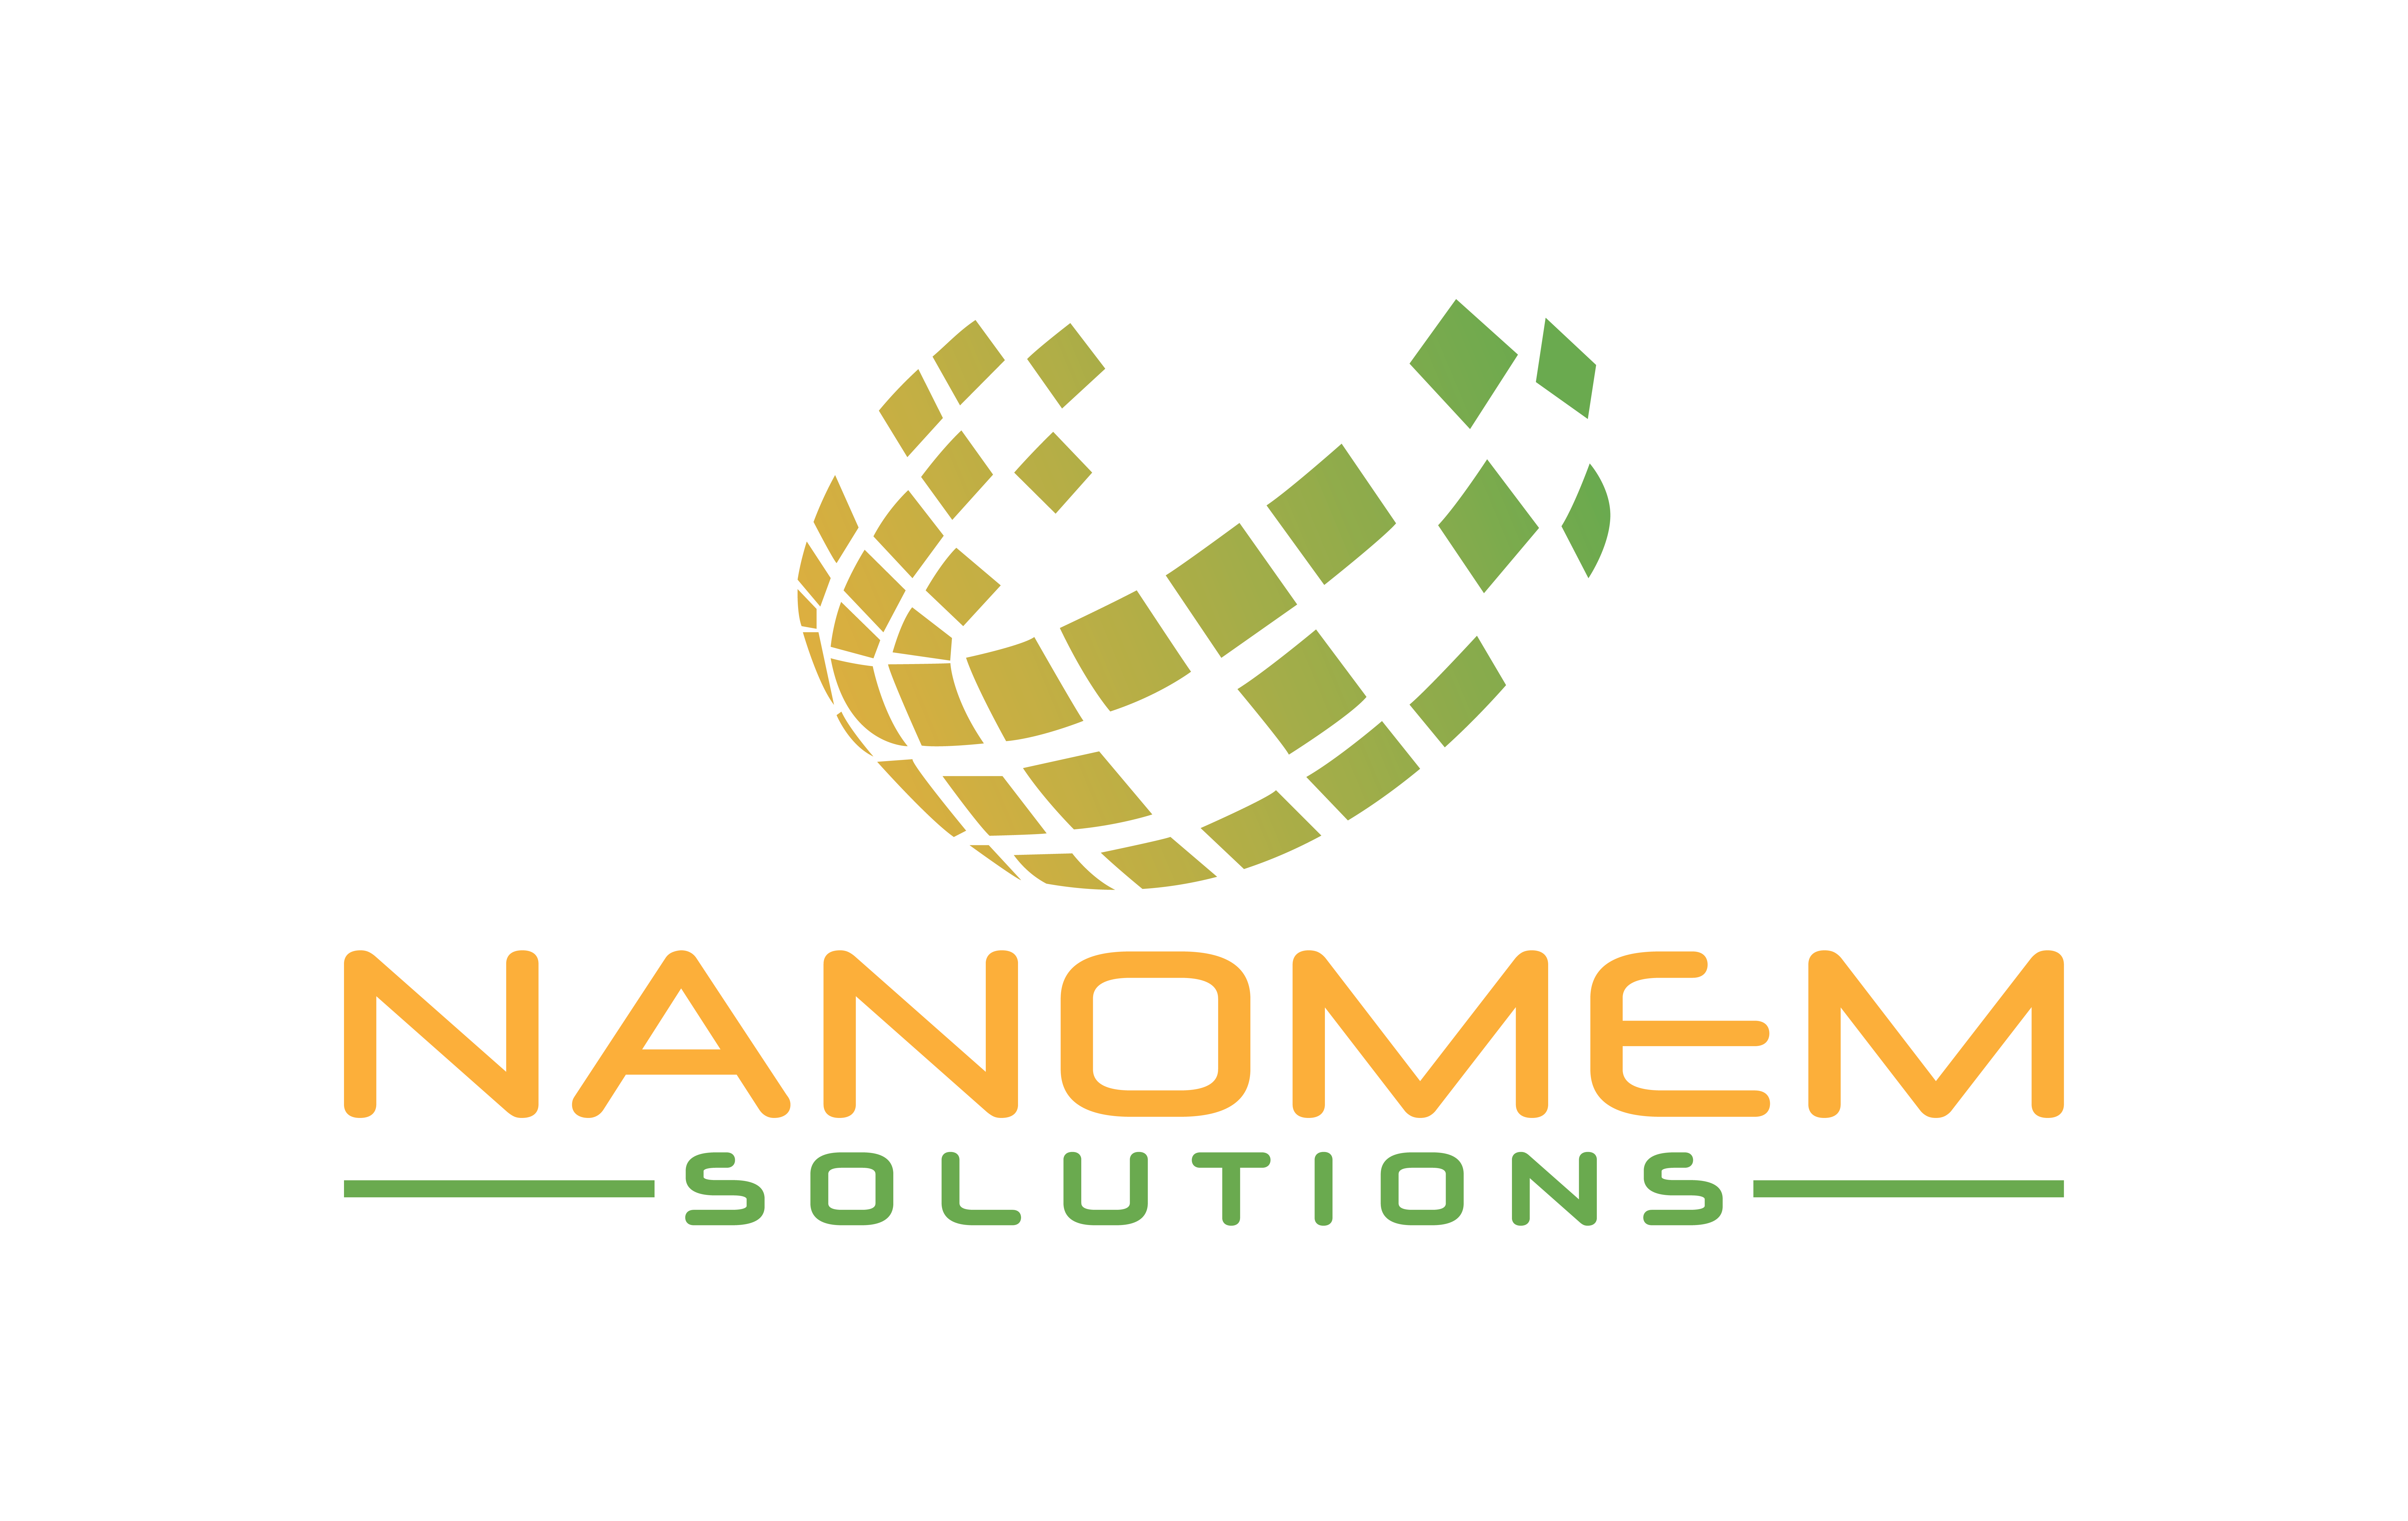 NanoMem Solutions